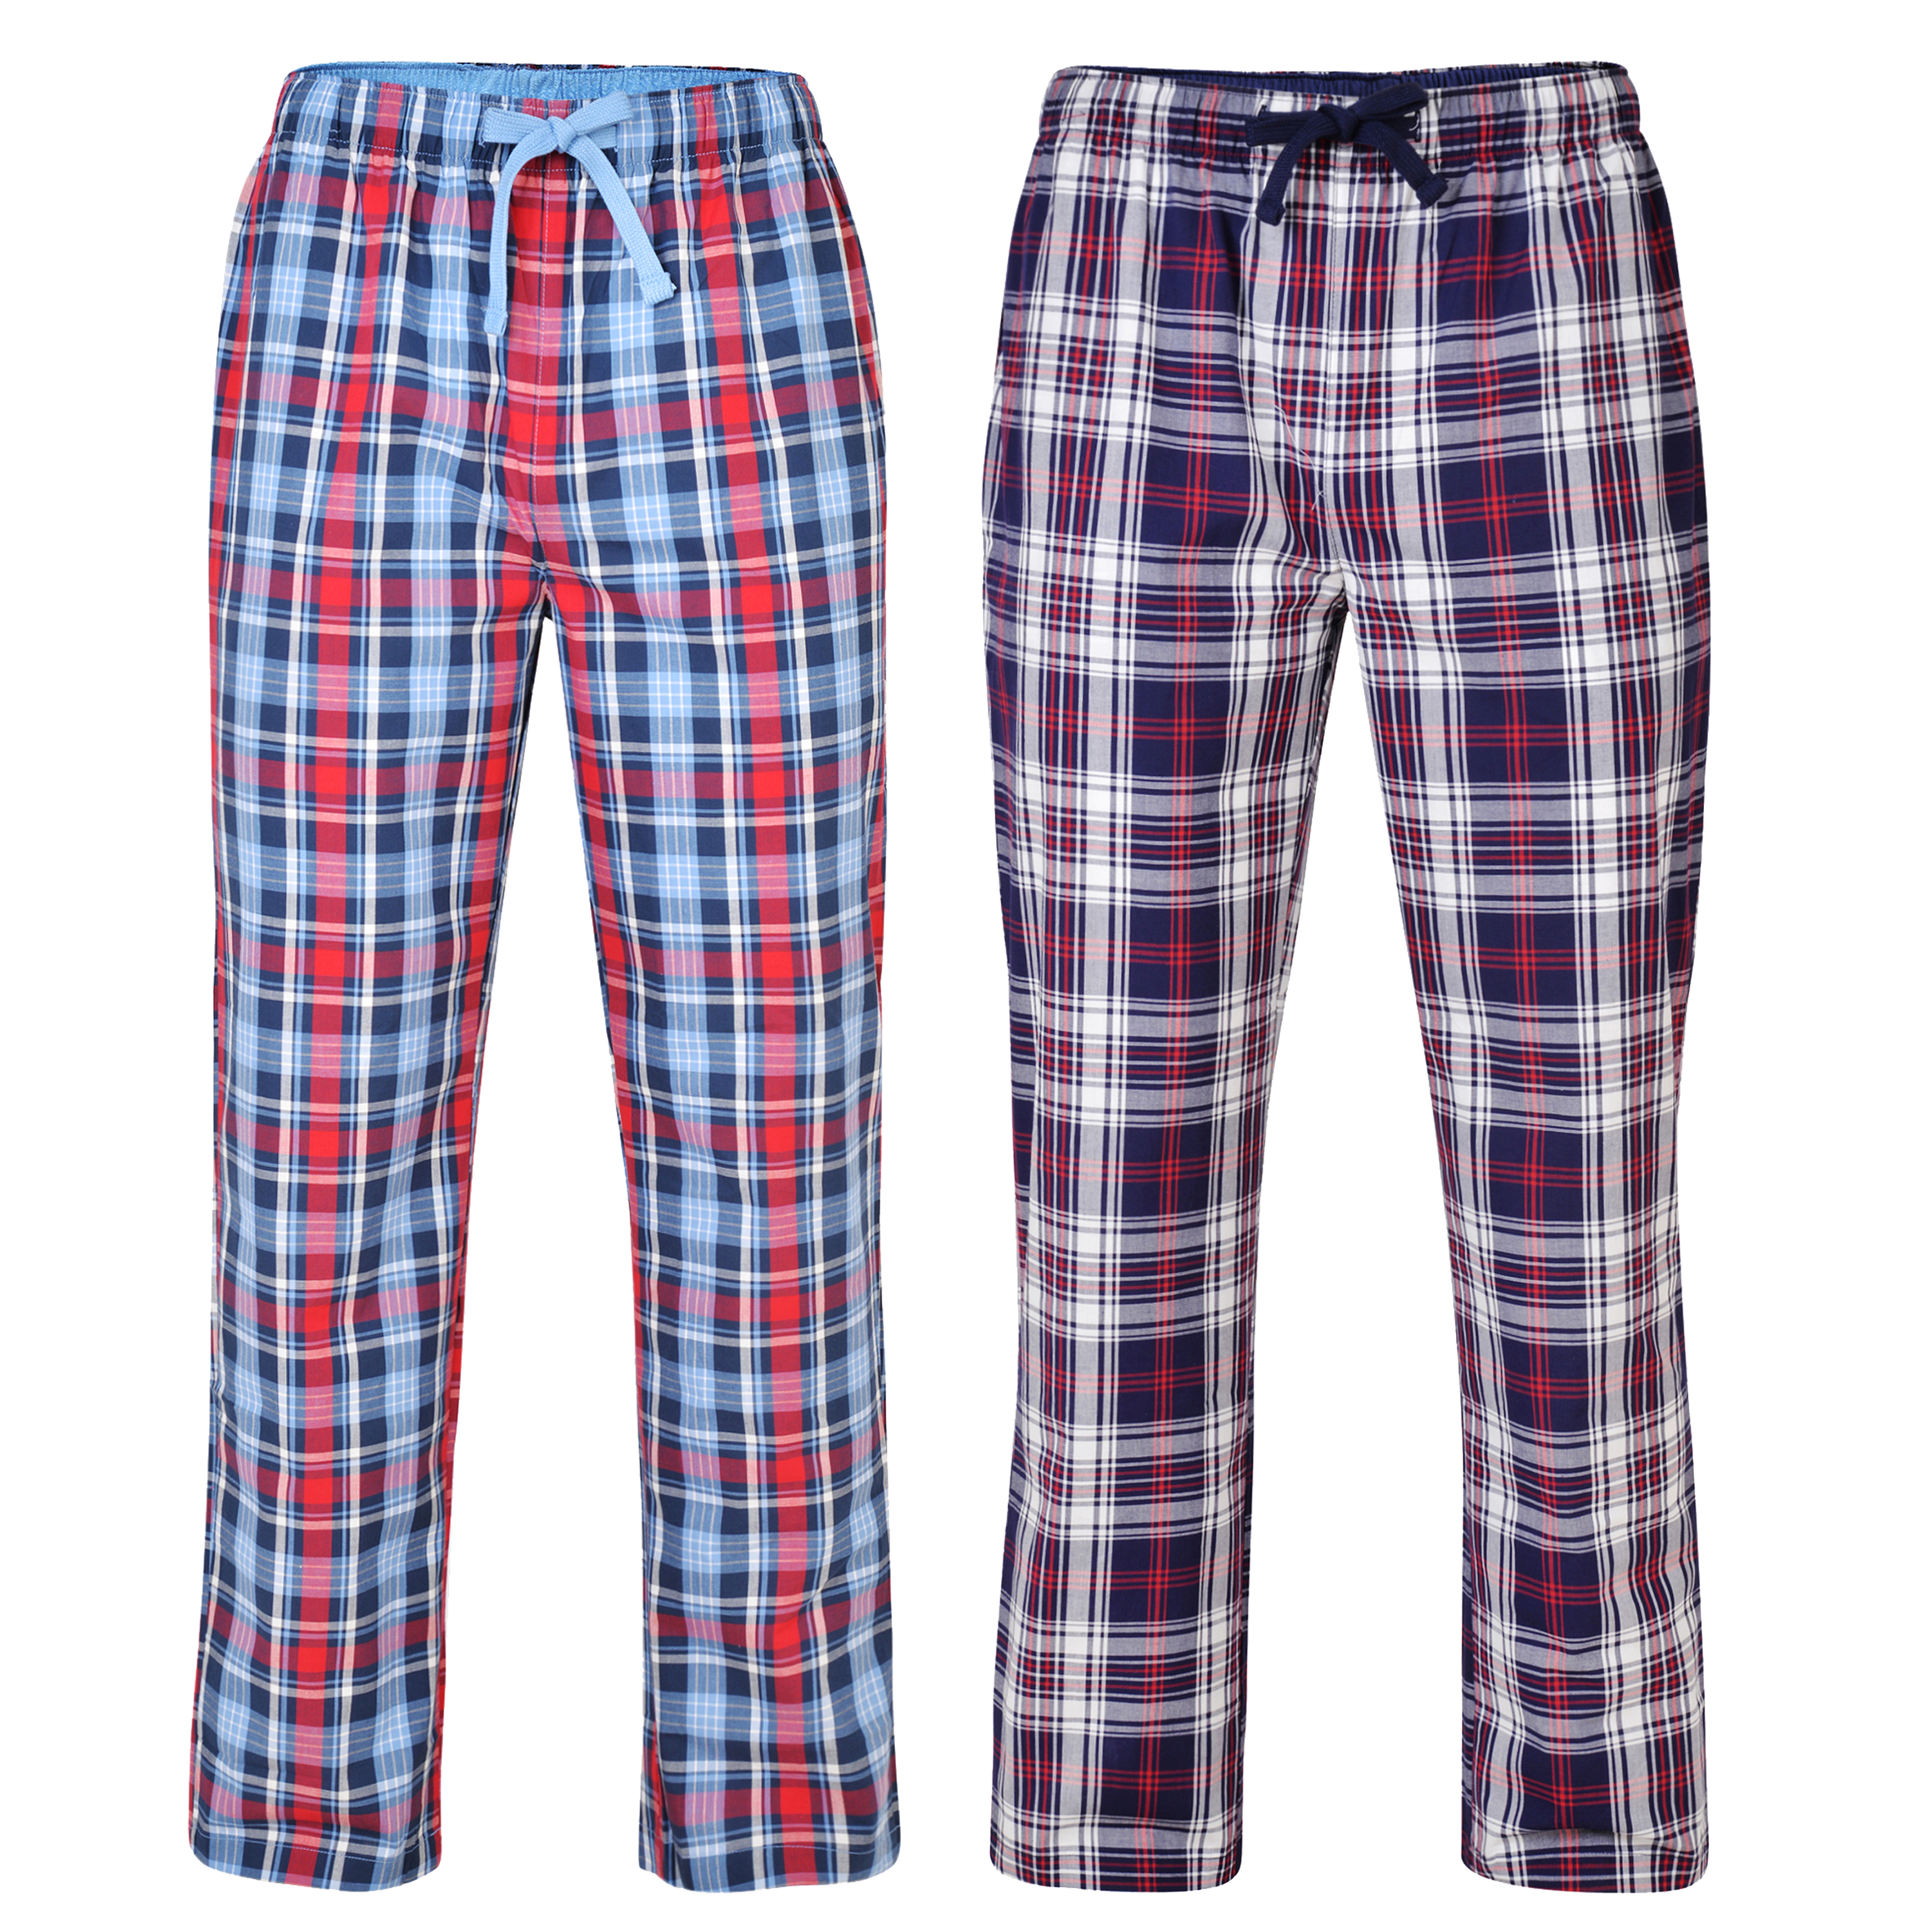 Mens Lounge Pants Pyjama Bottoms 100% Cotton Premium Loungewear Pockets